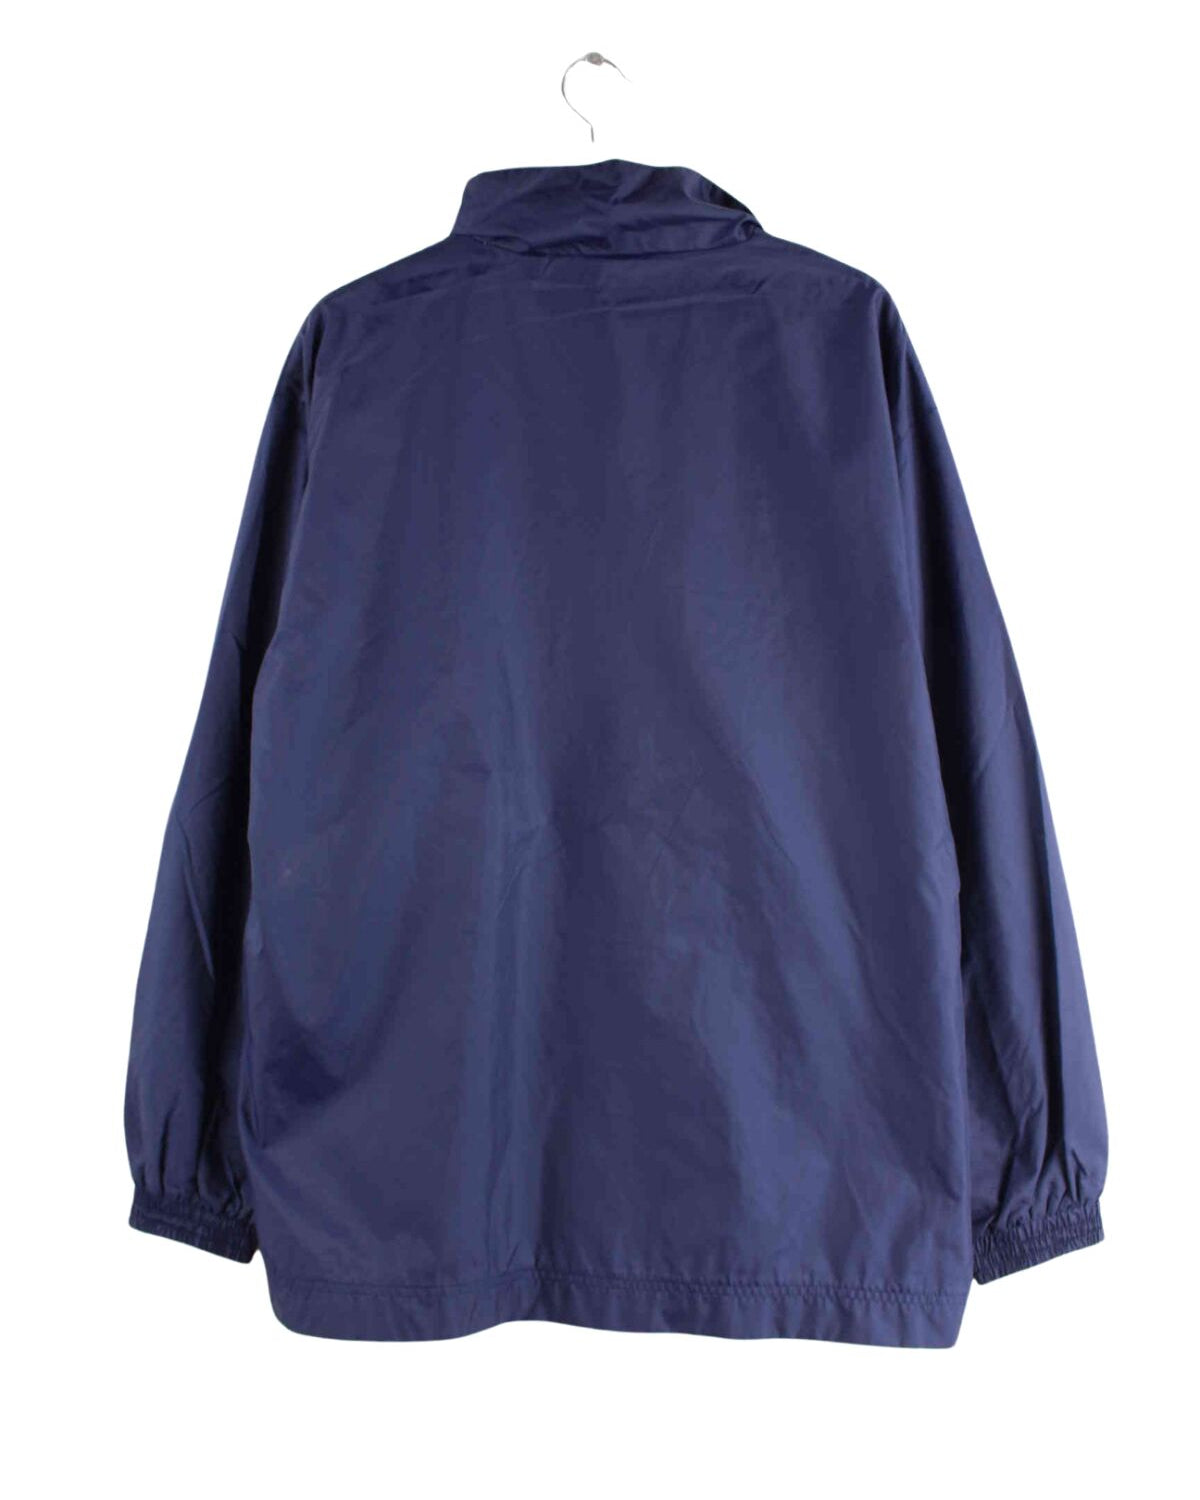 Fila 90s Vintage Embroidered Jacke Blau L (back image)